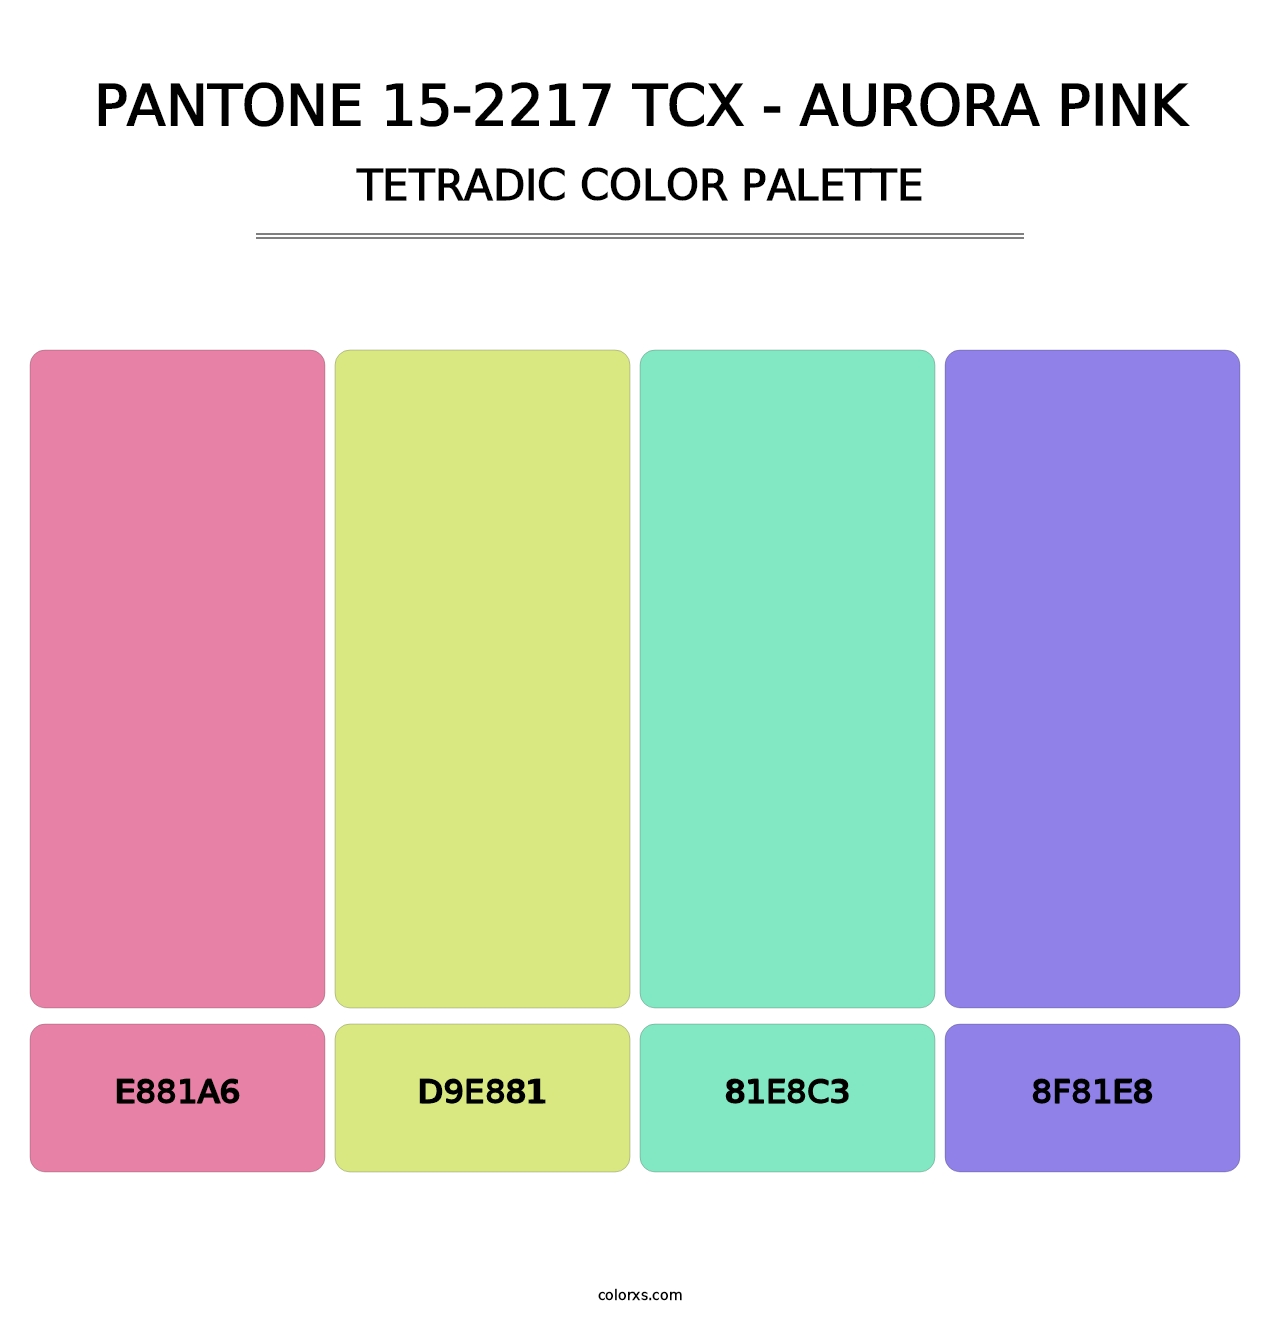 PANTONE 15-2217 TCX - Aurora Pink - Tetradic Color Palette